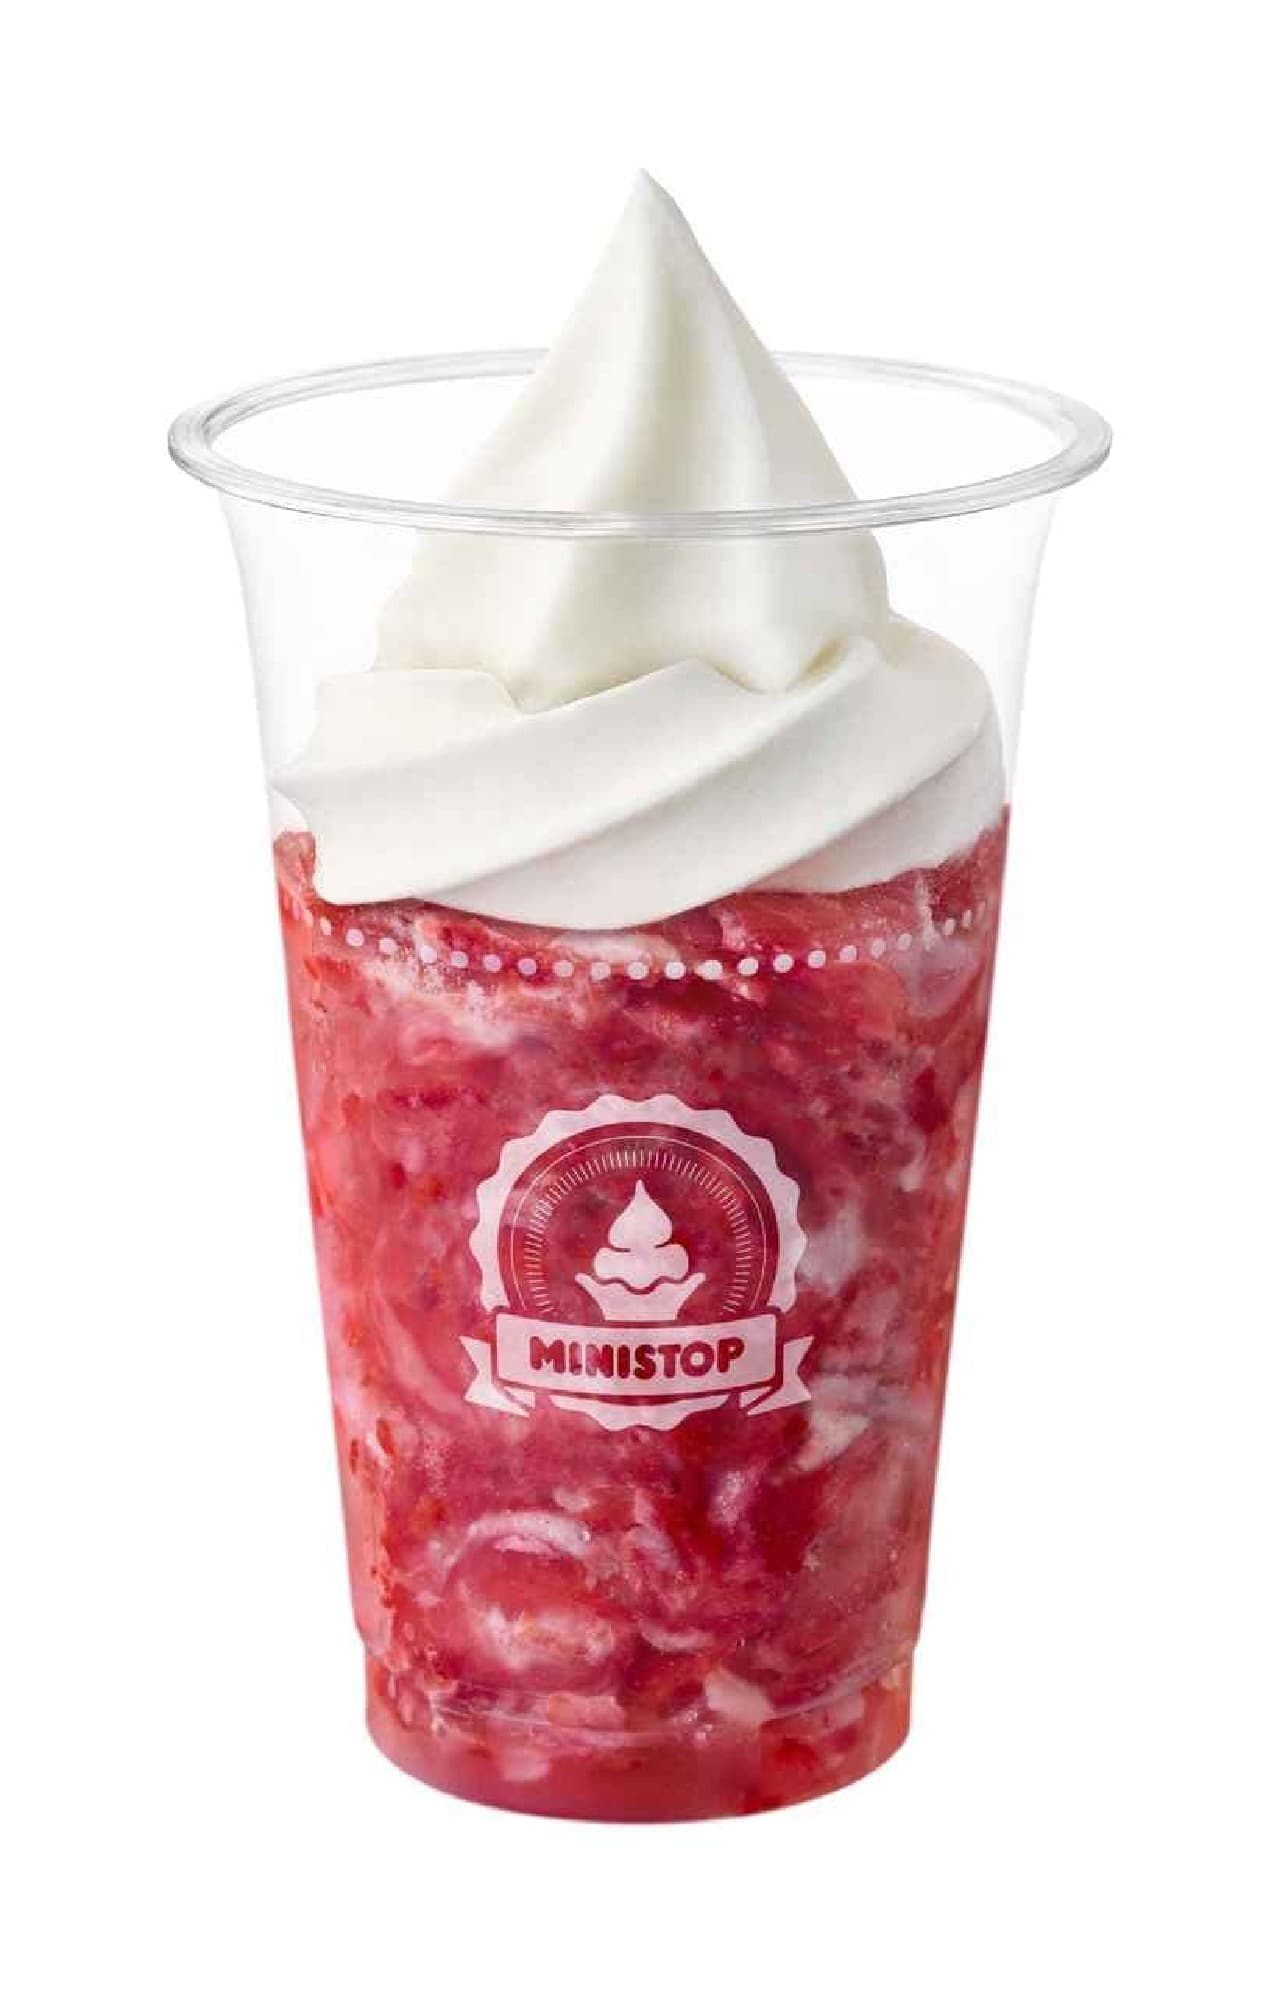 MINISTOP "Halo-Halo Fruit Ice with Condensed Milk Strawberry